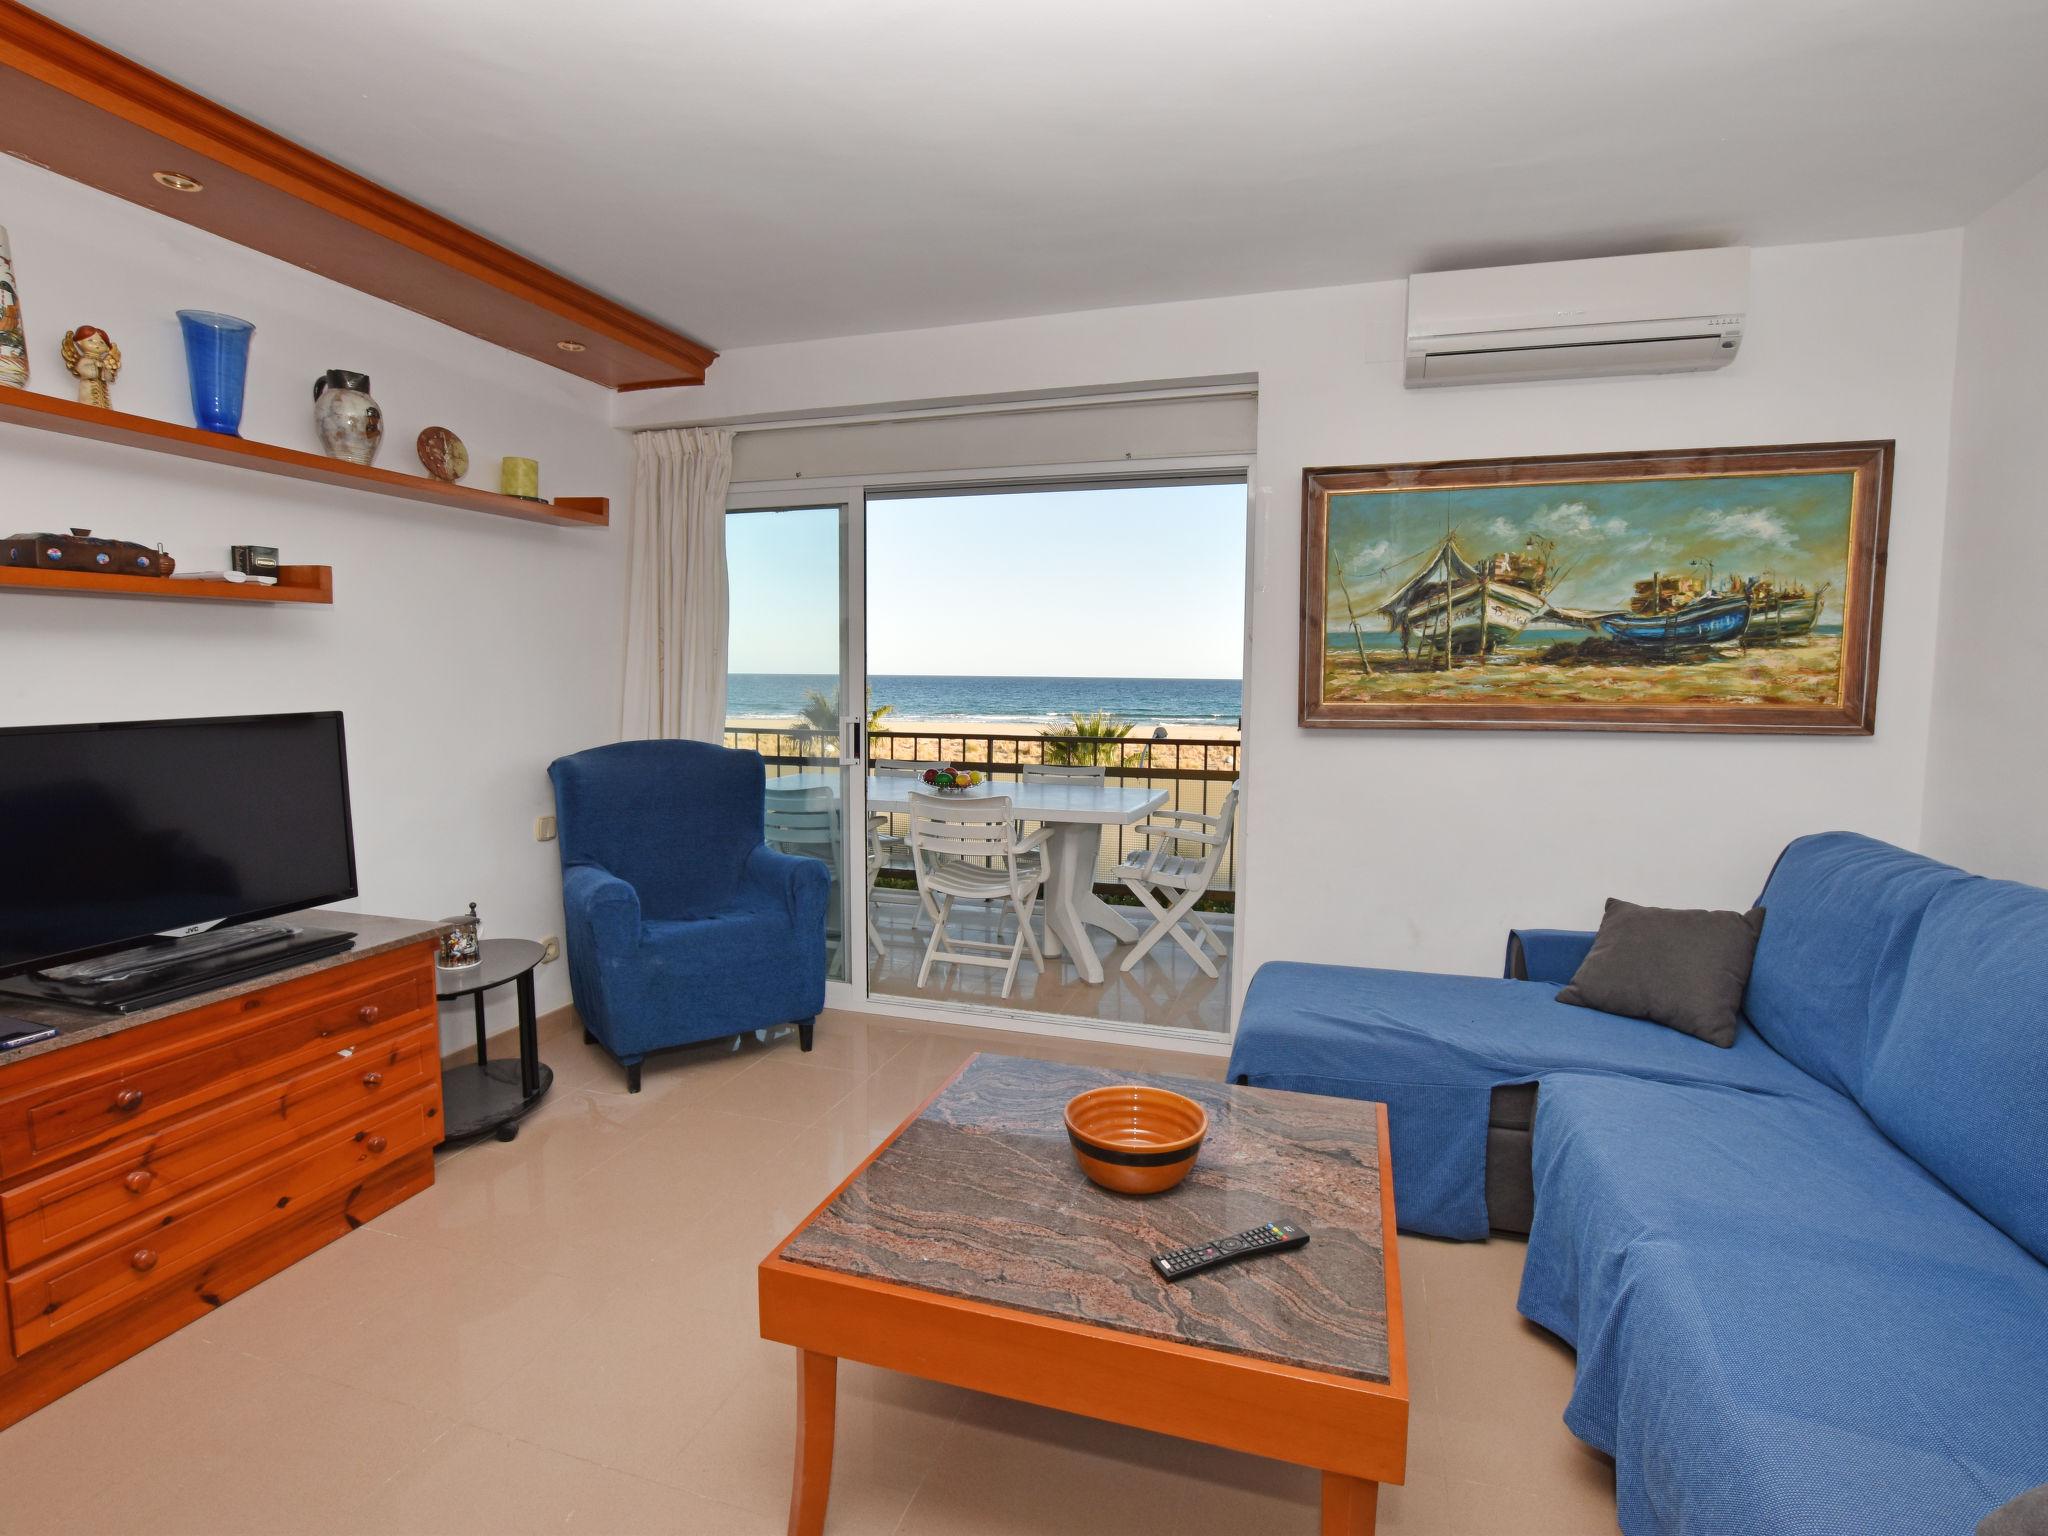 Photo 6 - Appartement de 4 chambres à Torredembarra avec terrasse et vues à la mer